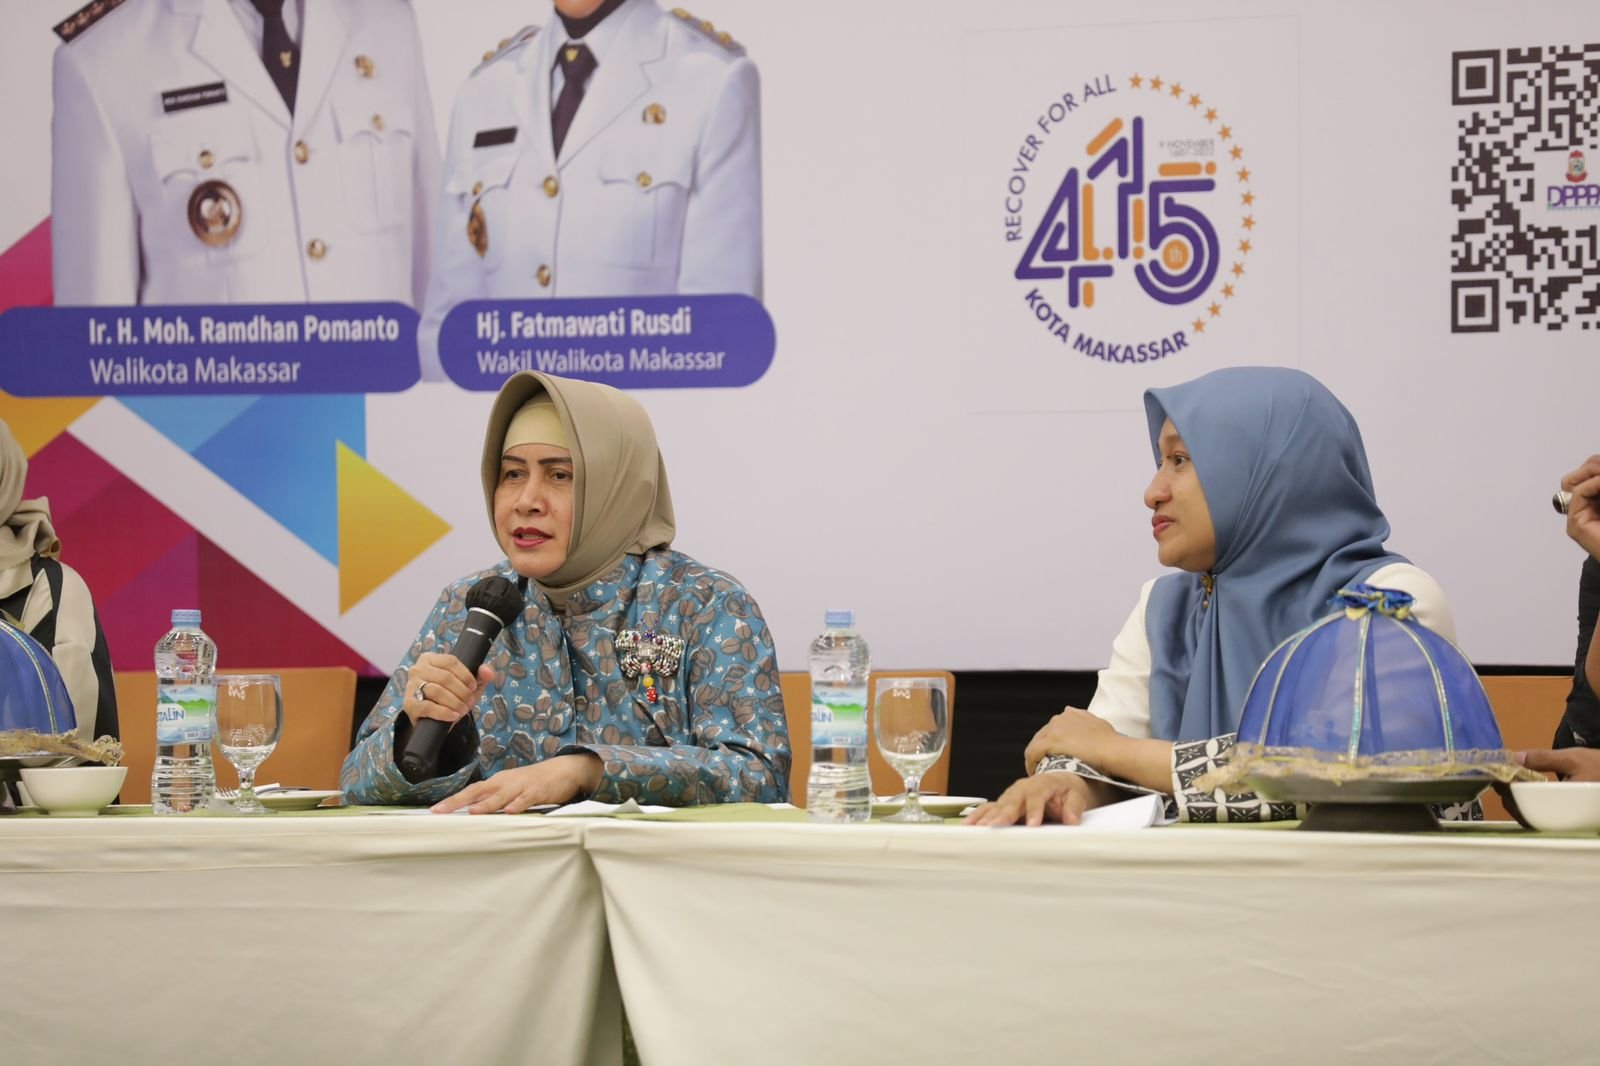 Indira Yusuf Ismail Motivasi Forum Anak Makassar Sebagai Agen 2P